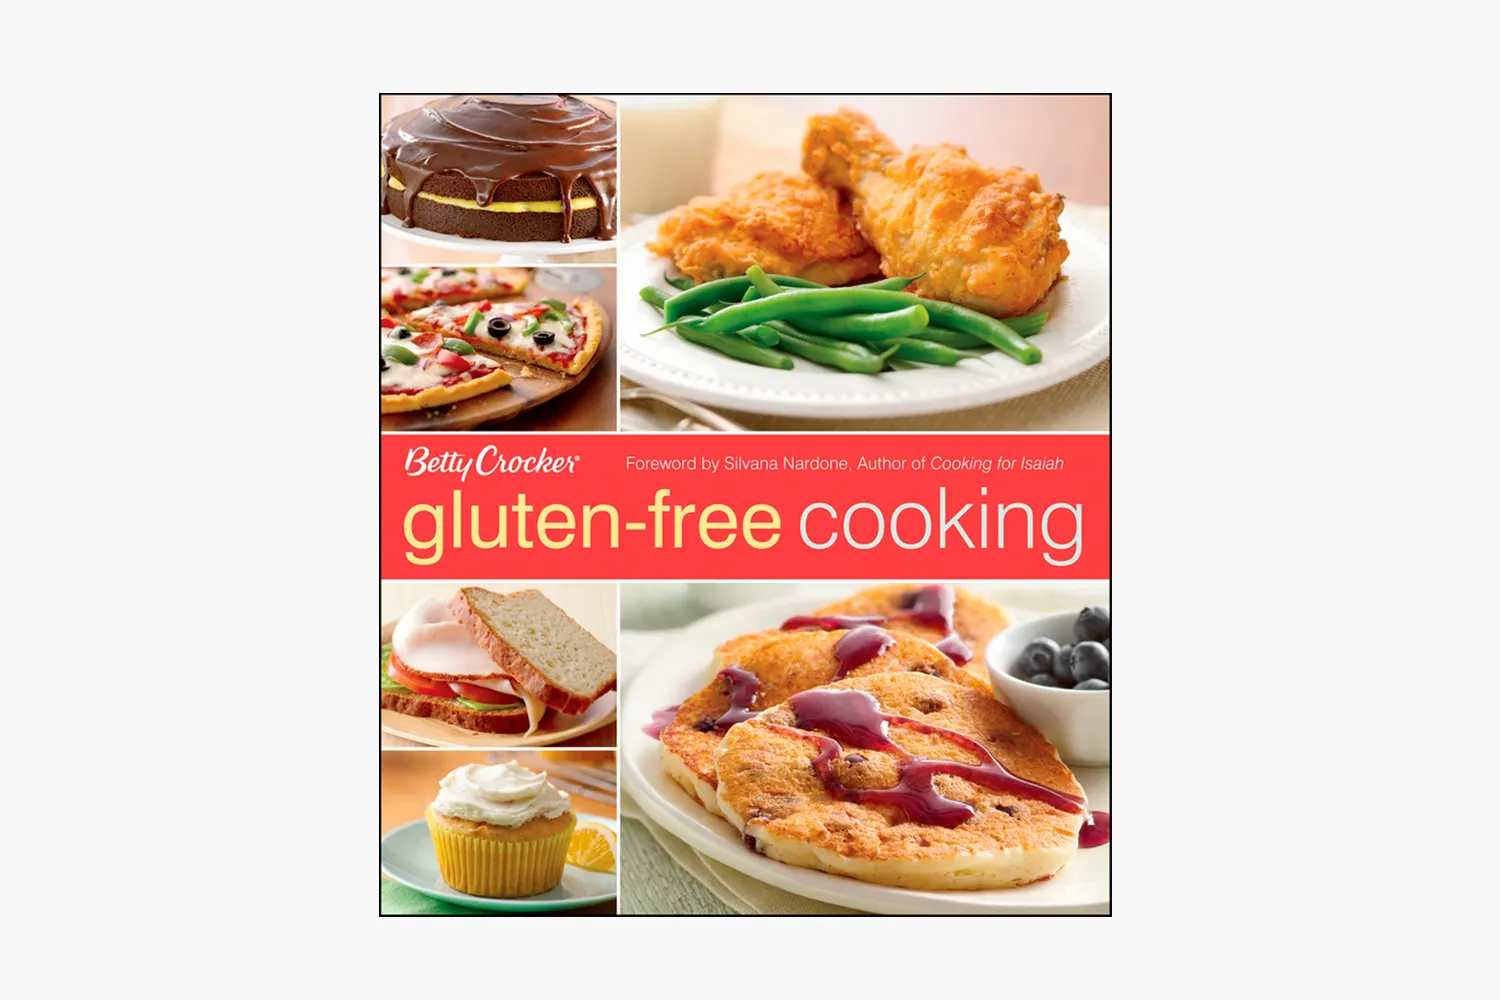 Betty Crocker Gluten-Free Cooking Book Cover